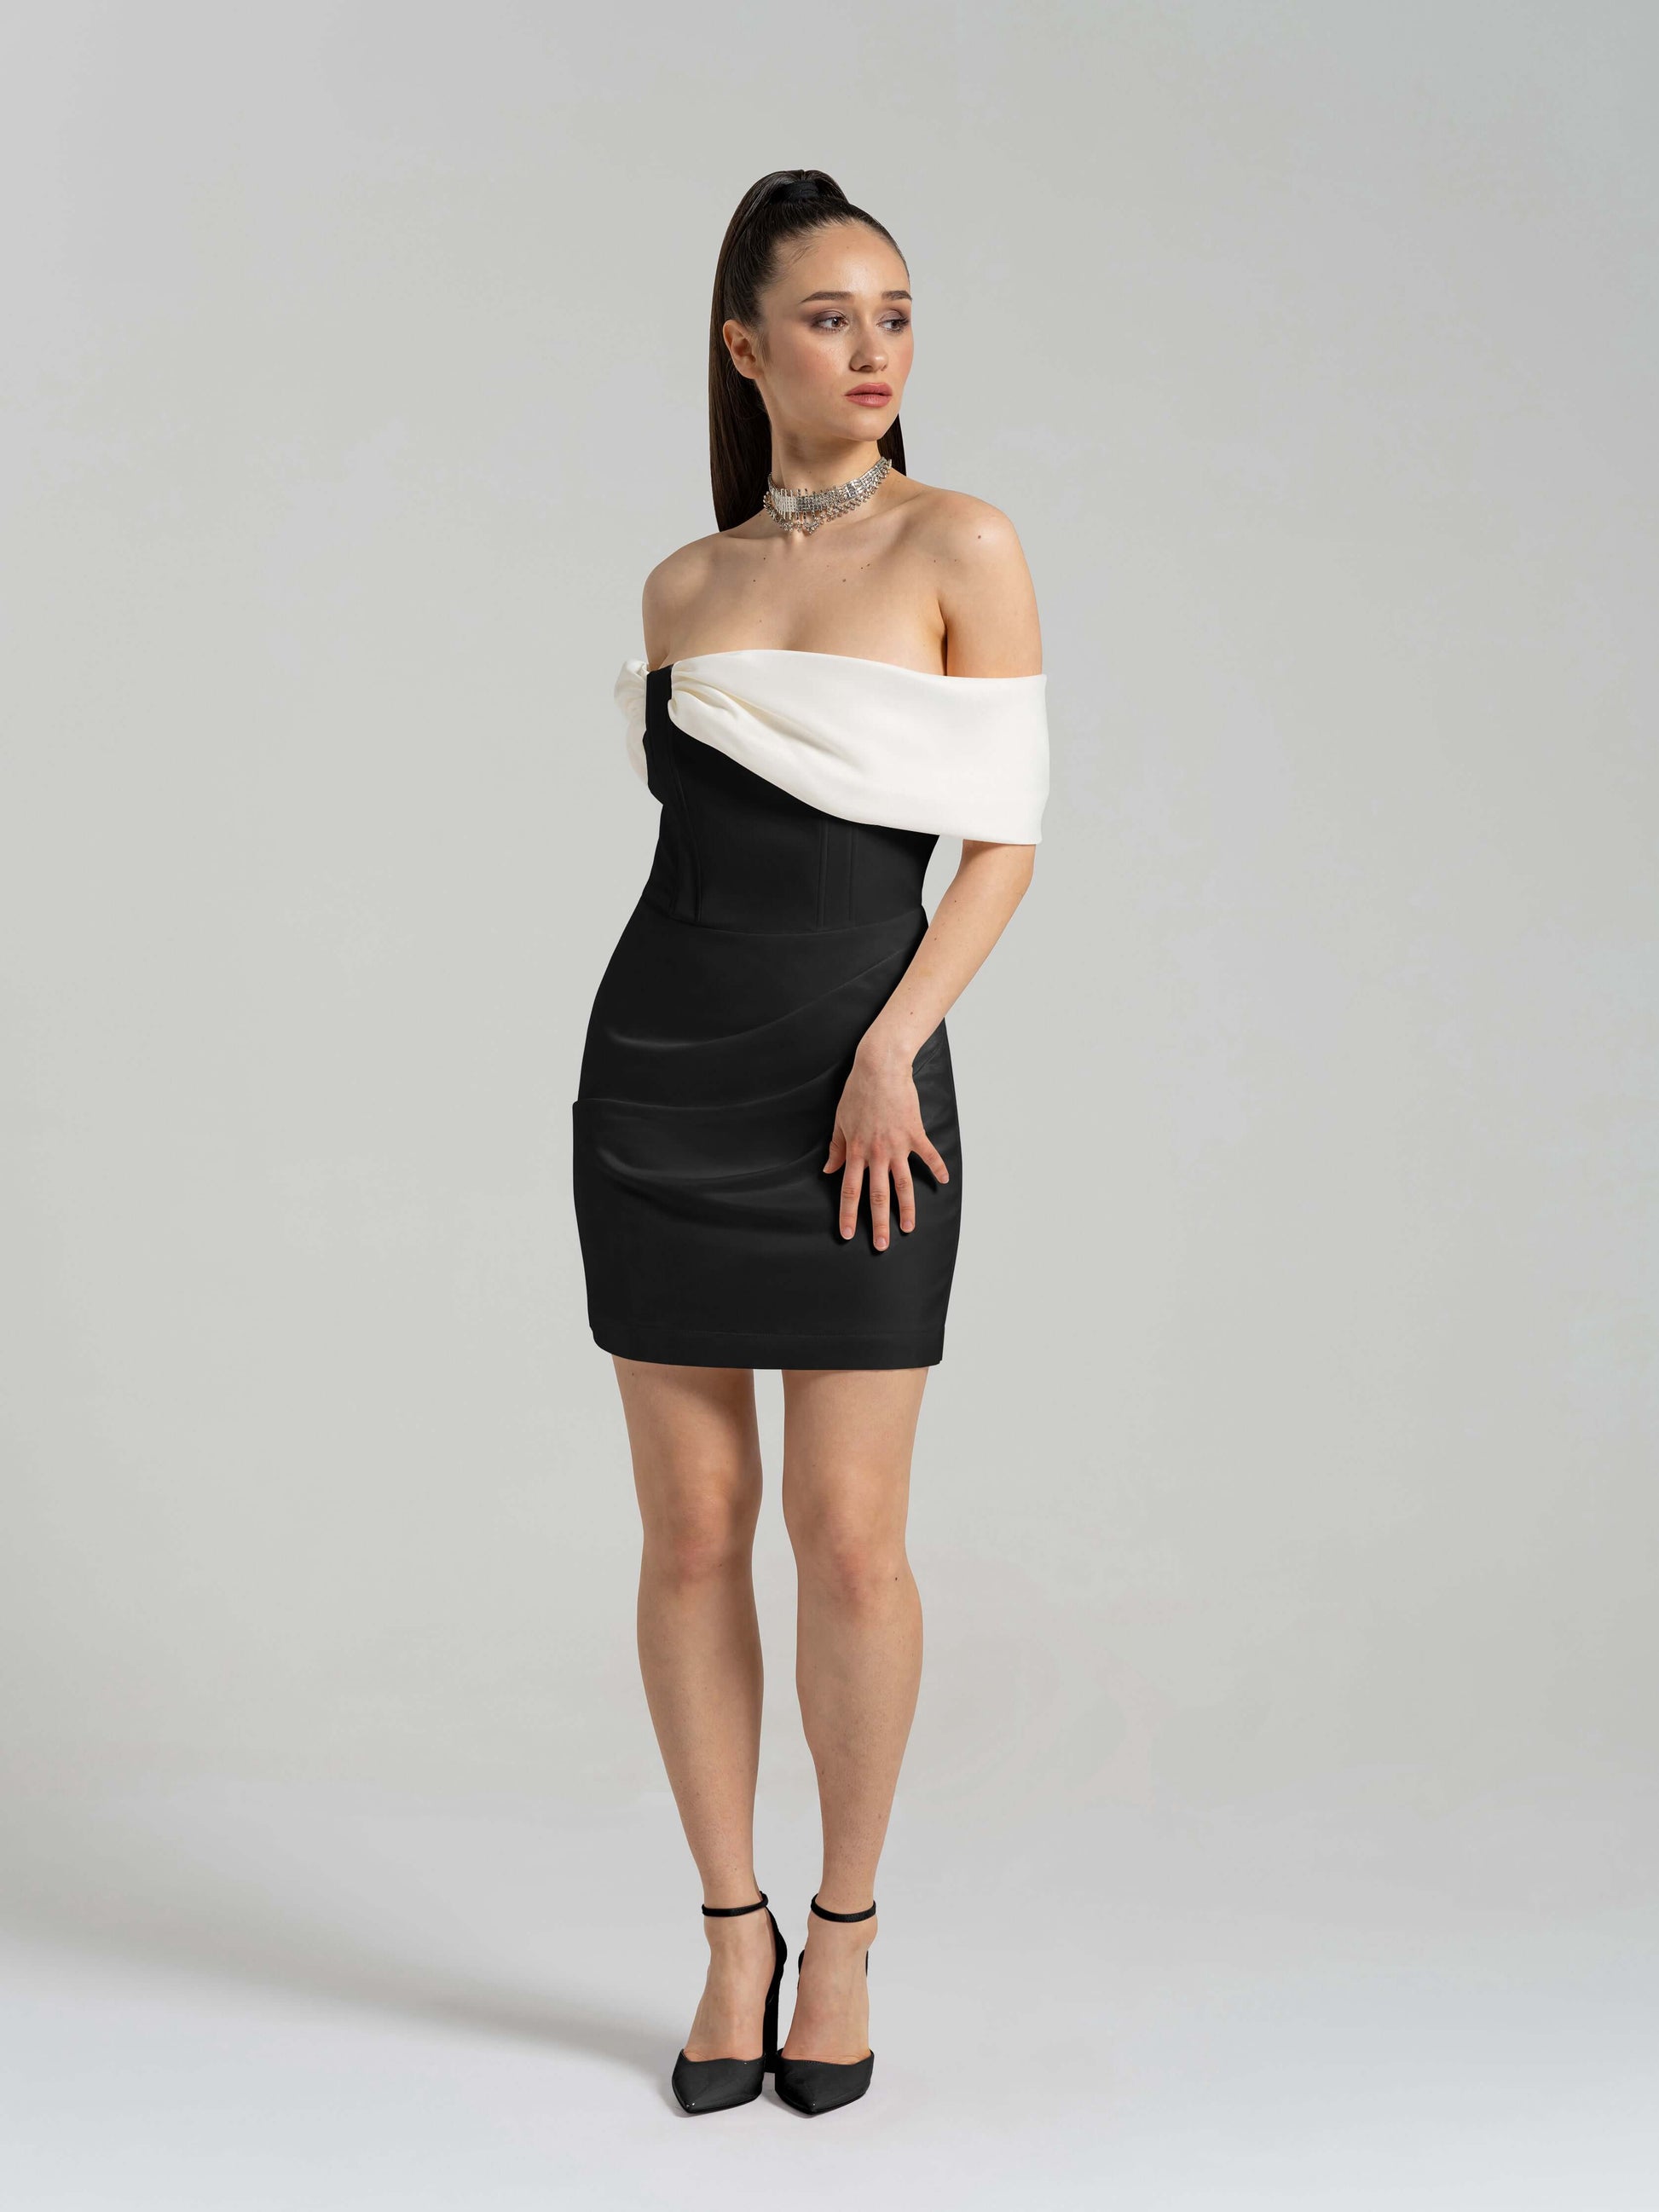 Signature of the Sun Mini Dress - Black & White by Tia Dorraine Women's Luxury Fashion Designer Clothing Brand